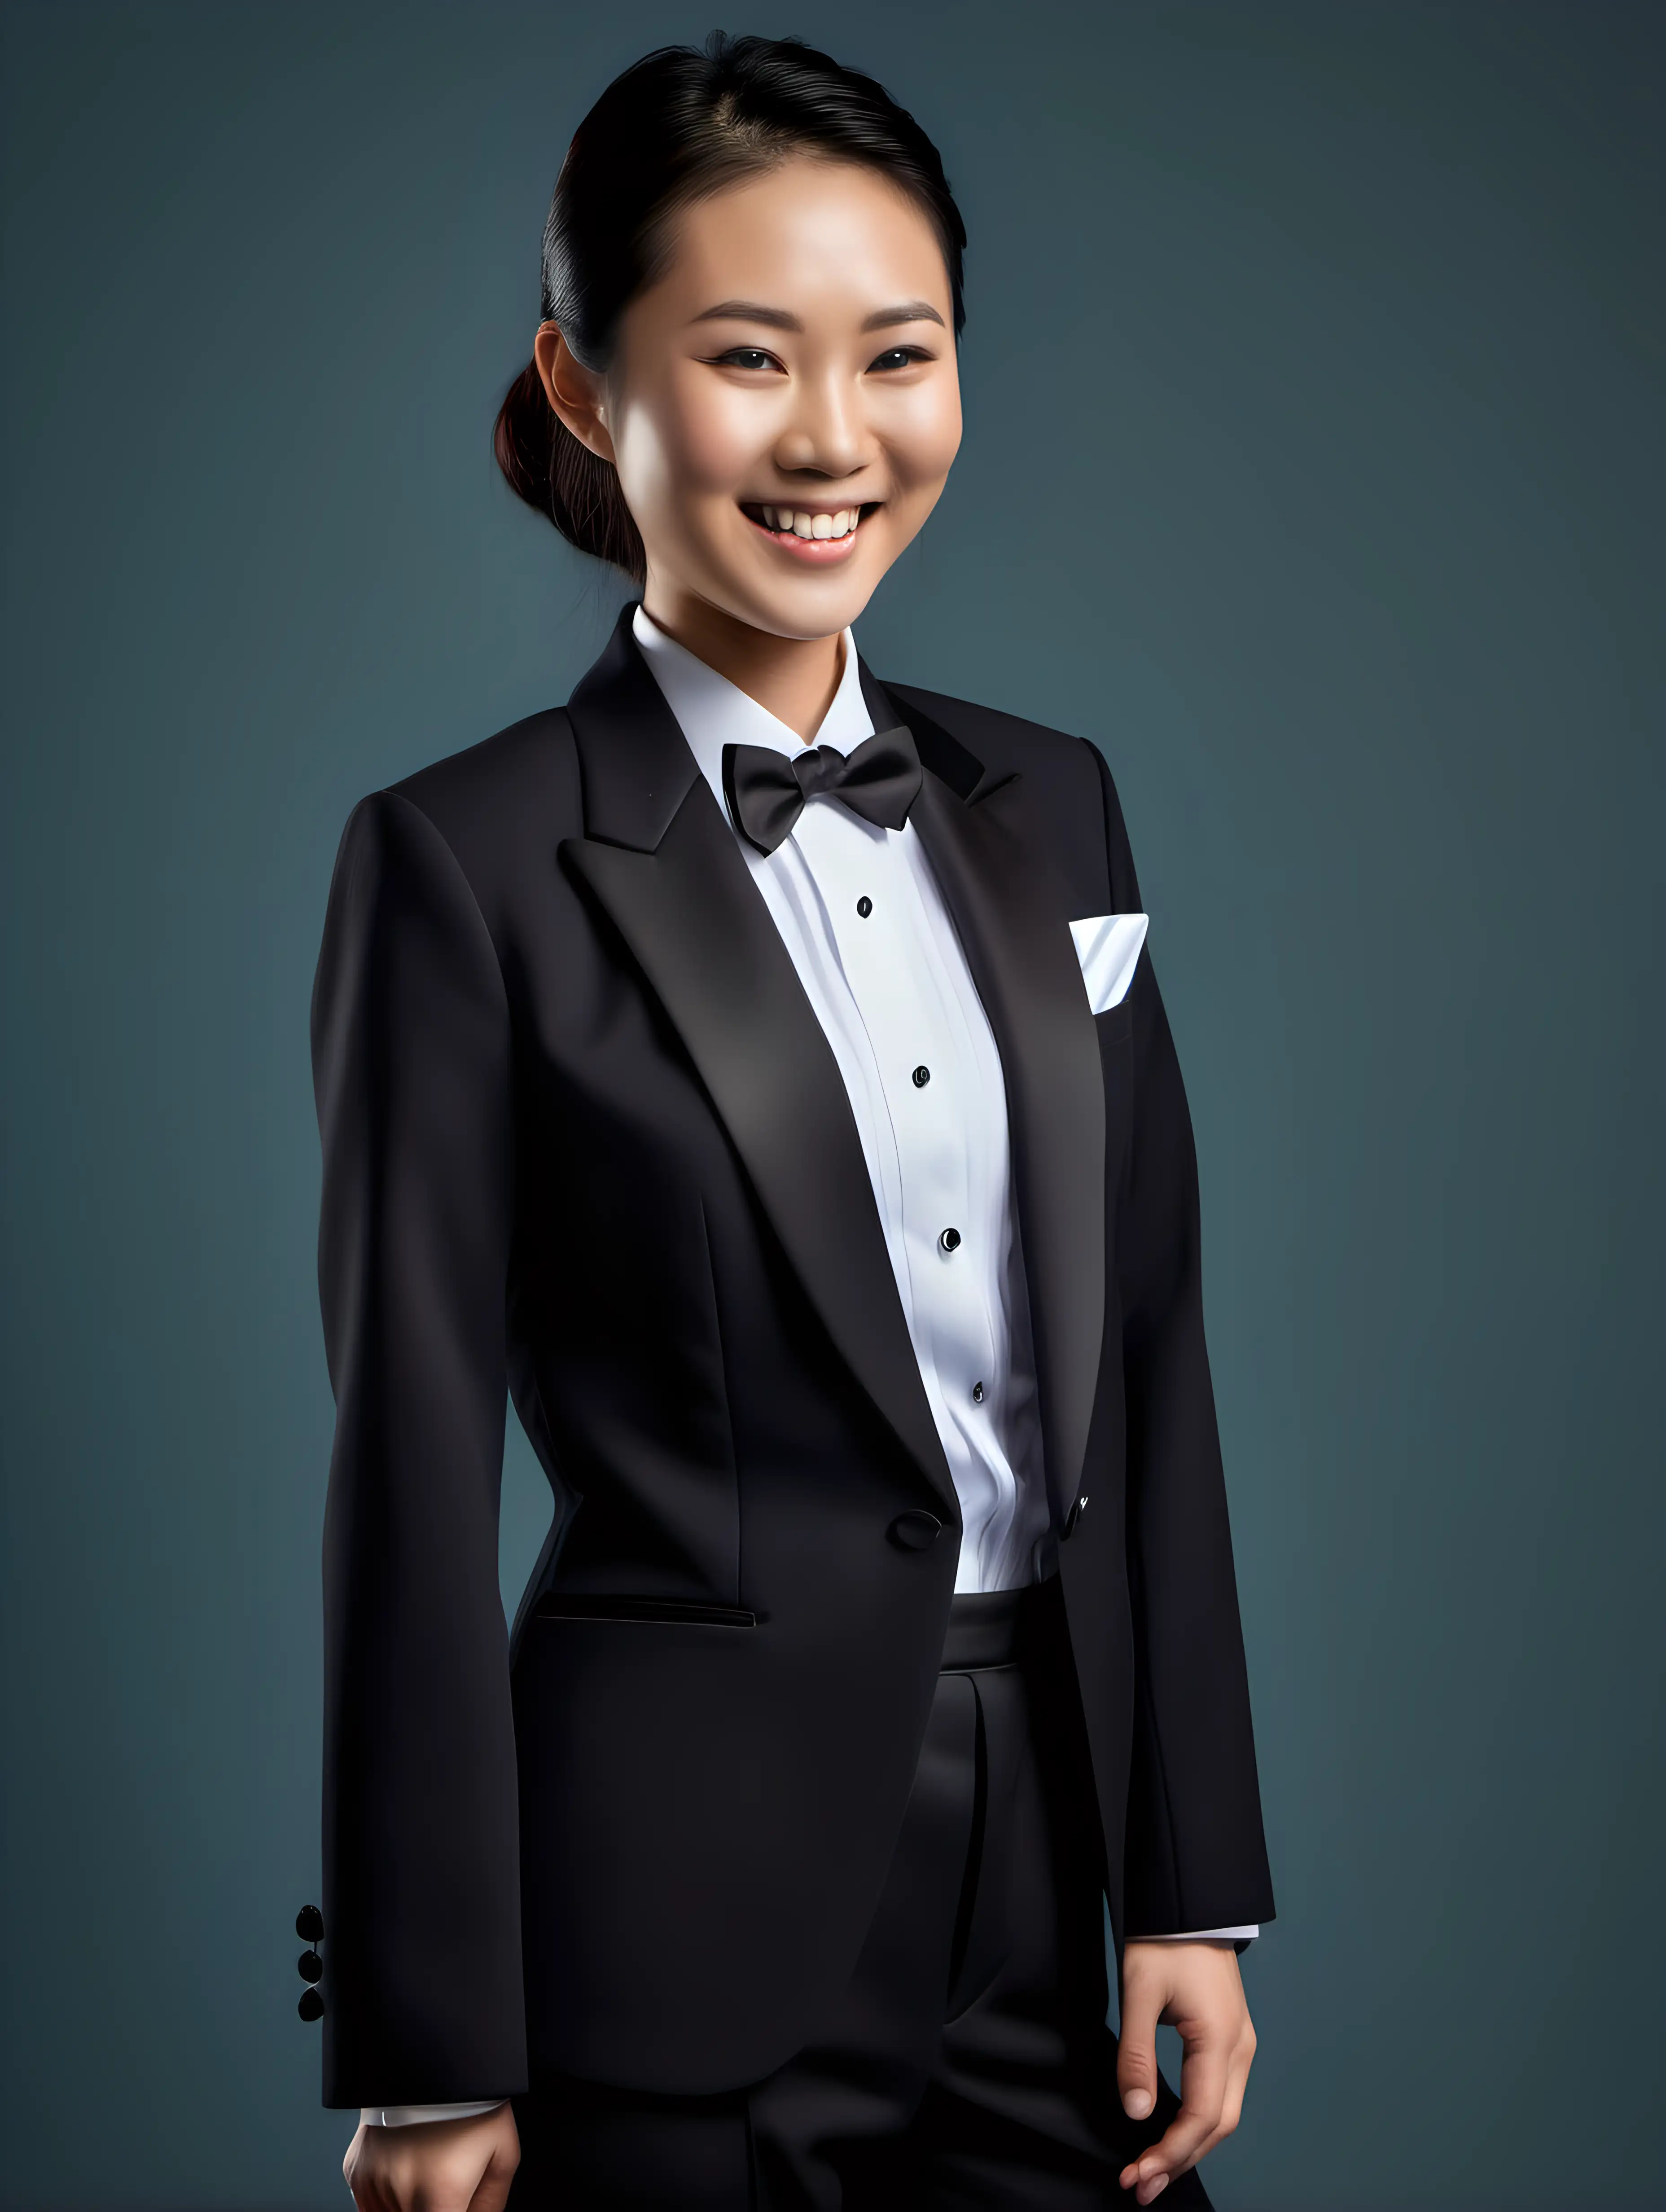 smiling asian woman wearing a tuxedo. Her jacket is open. She has cufflinks.